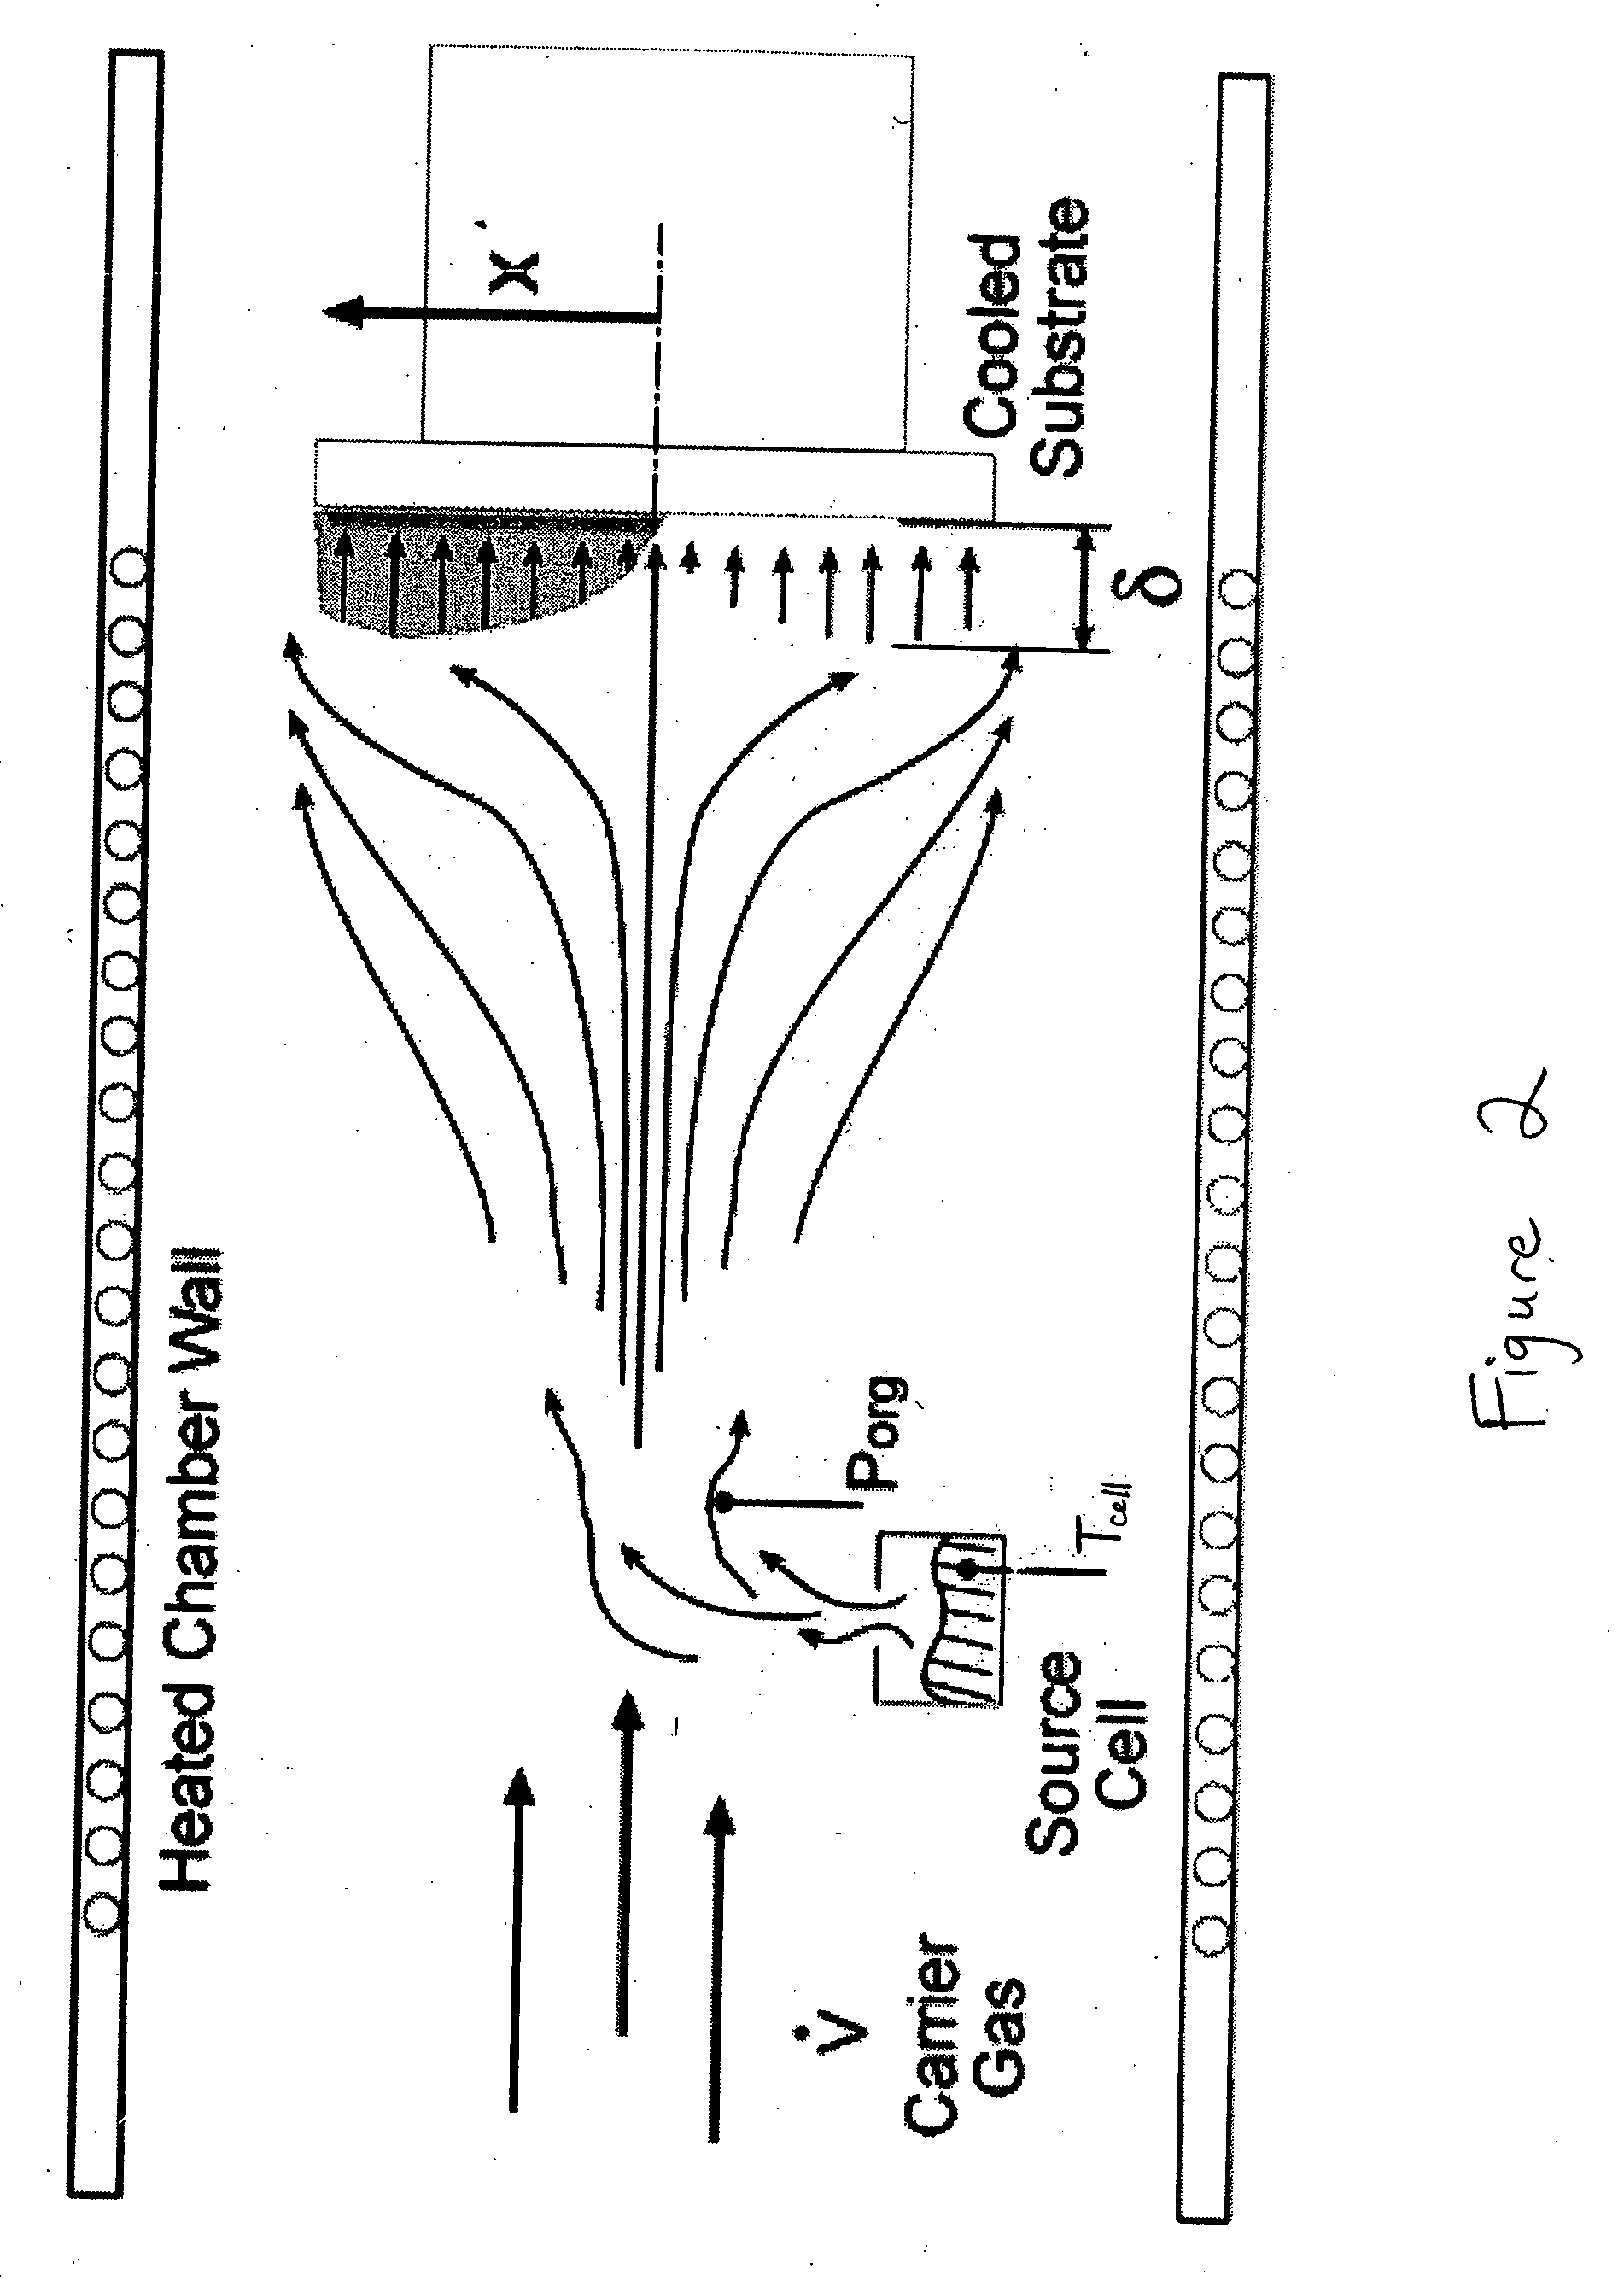 Method of fabricating an optoelectronic device having a bulk heterojunction